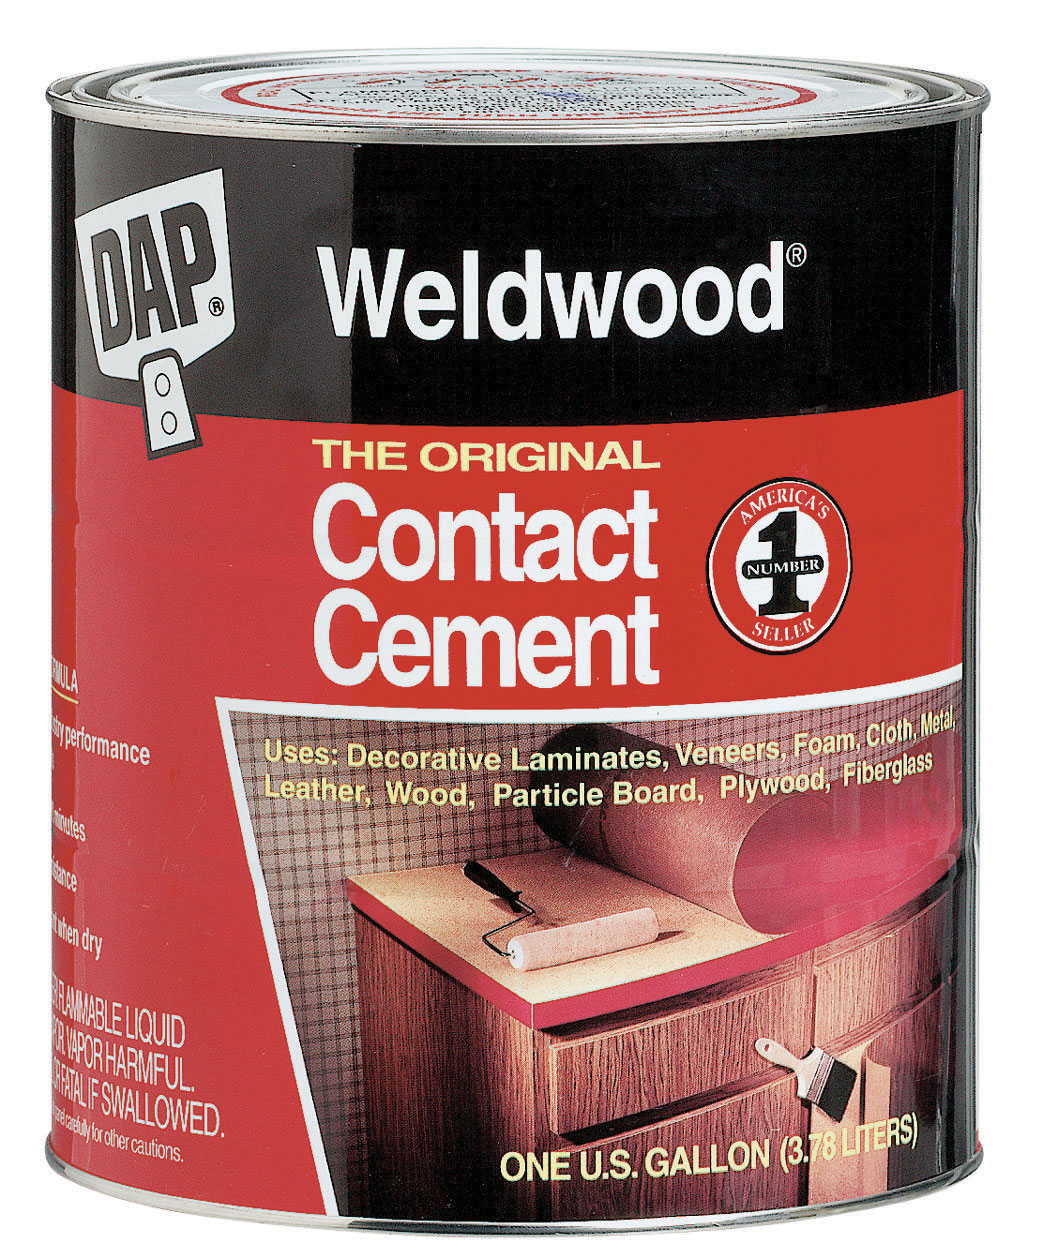 Diamond Tool: DAP 25336 DAP Weldwood Nonflammable Contact Cement - 1 Gallon